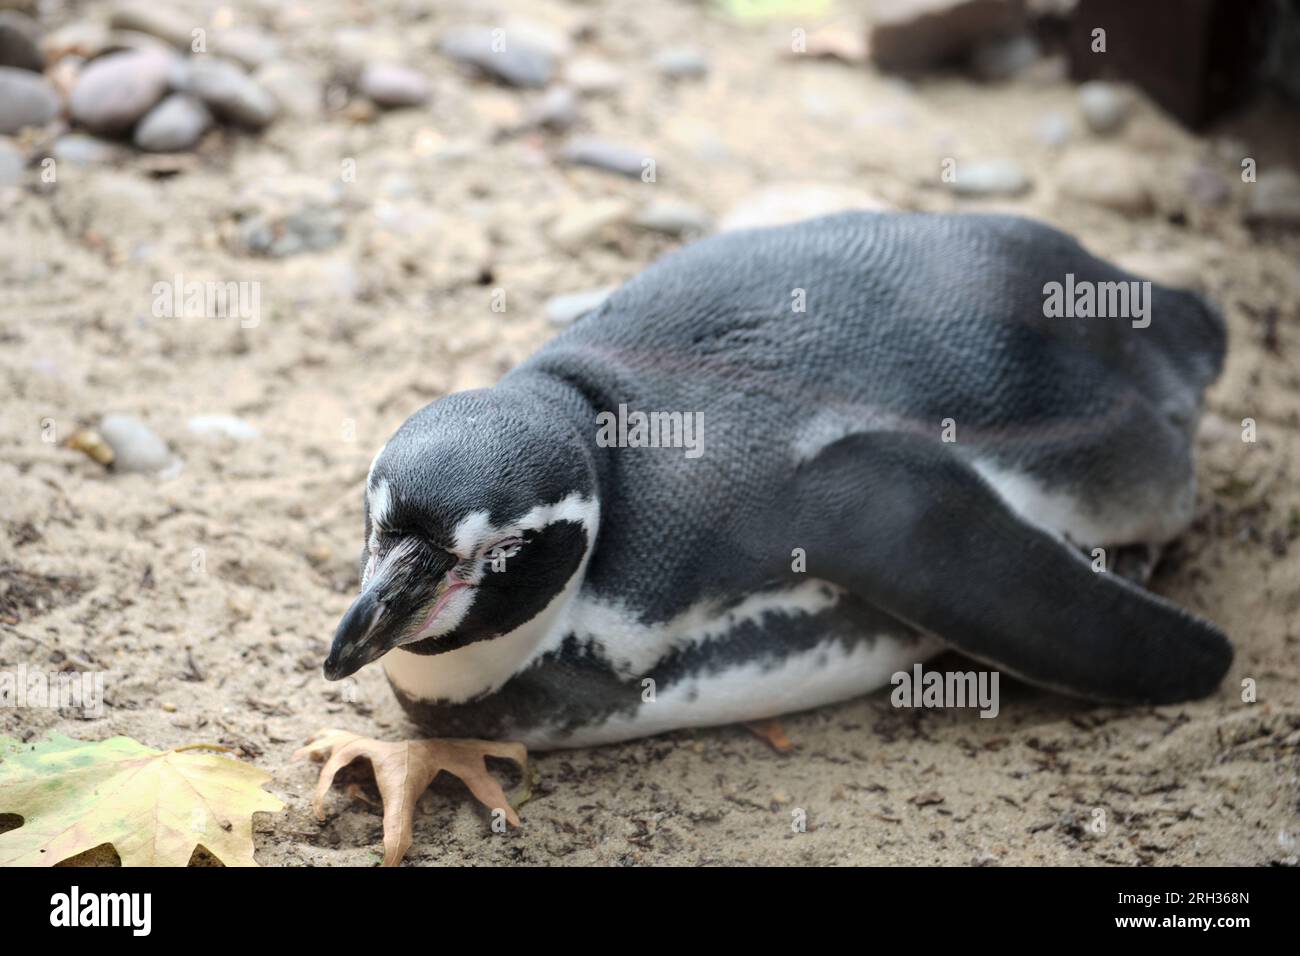 Graceful Flightless Bird: Close-up of a Penguin Stock Photo